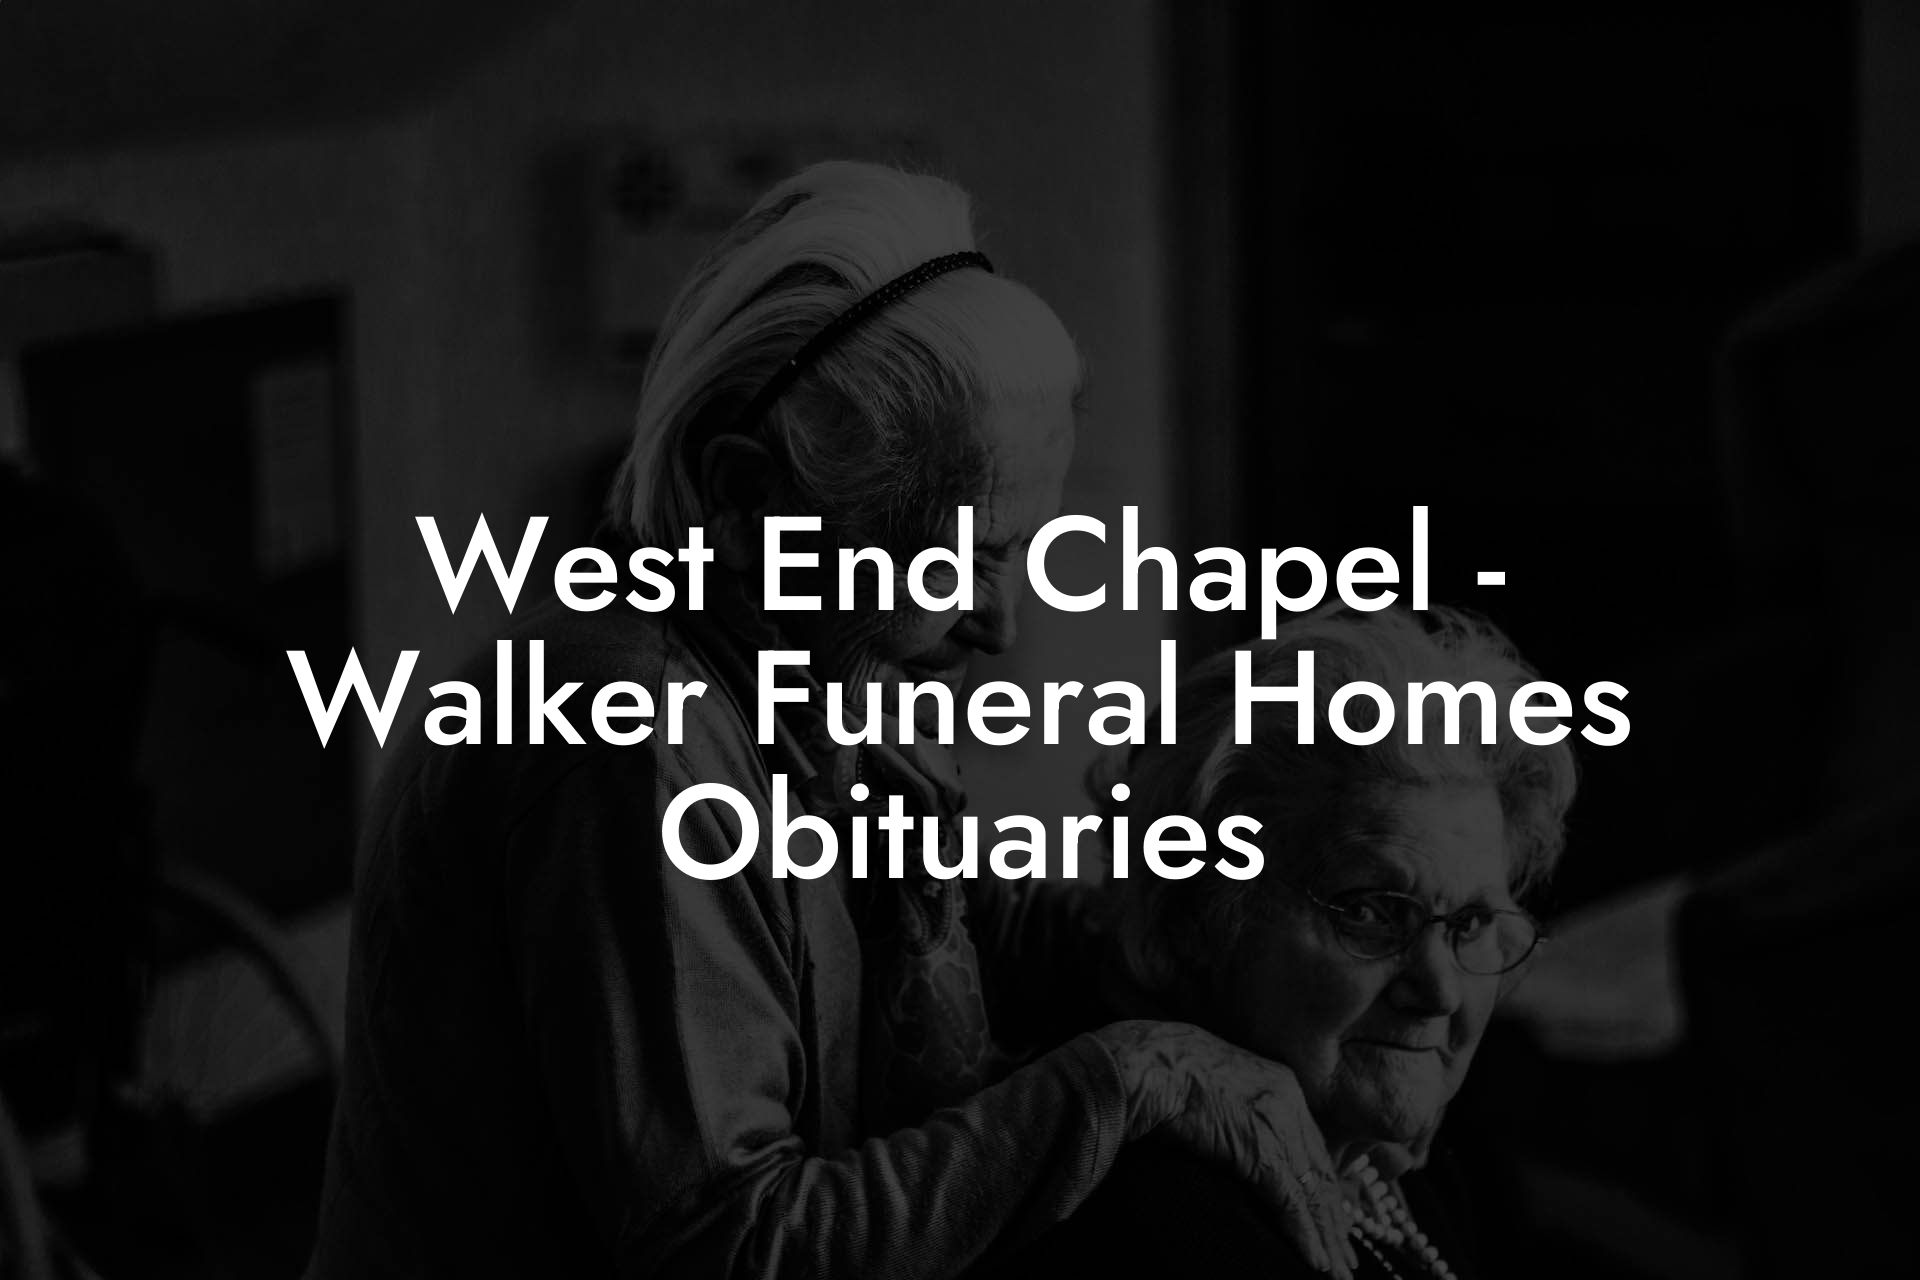 West End Chapel - Walker Funeral Homes Obituaries